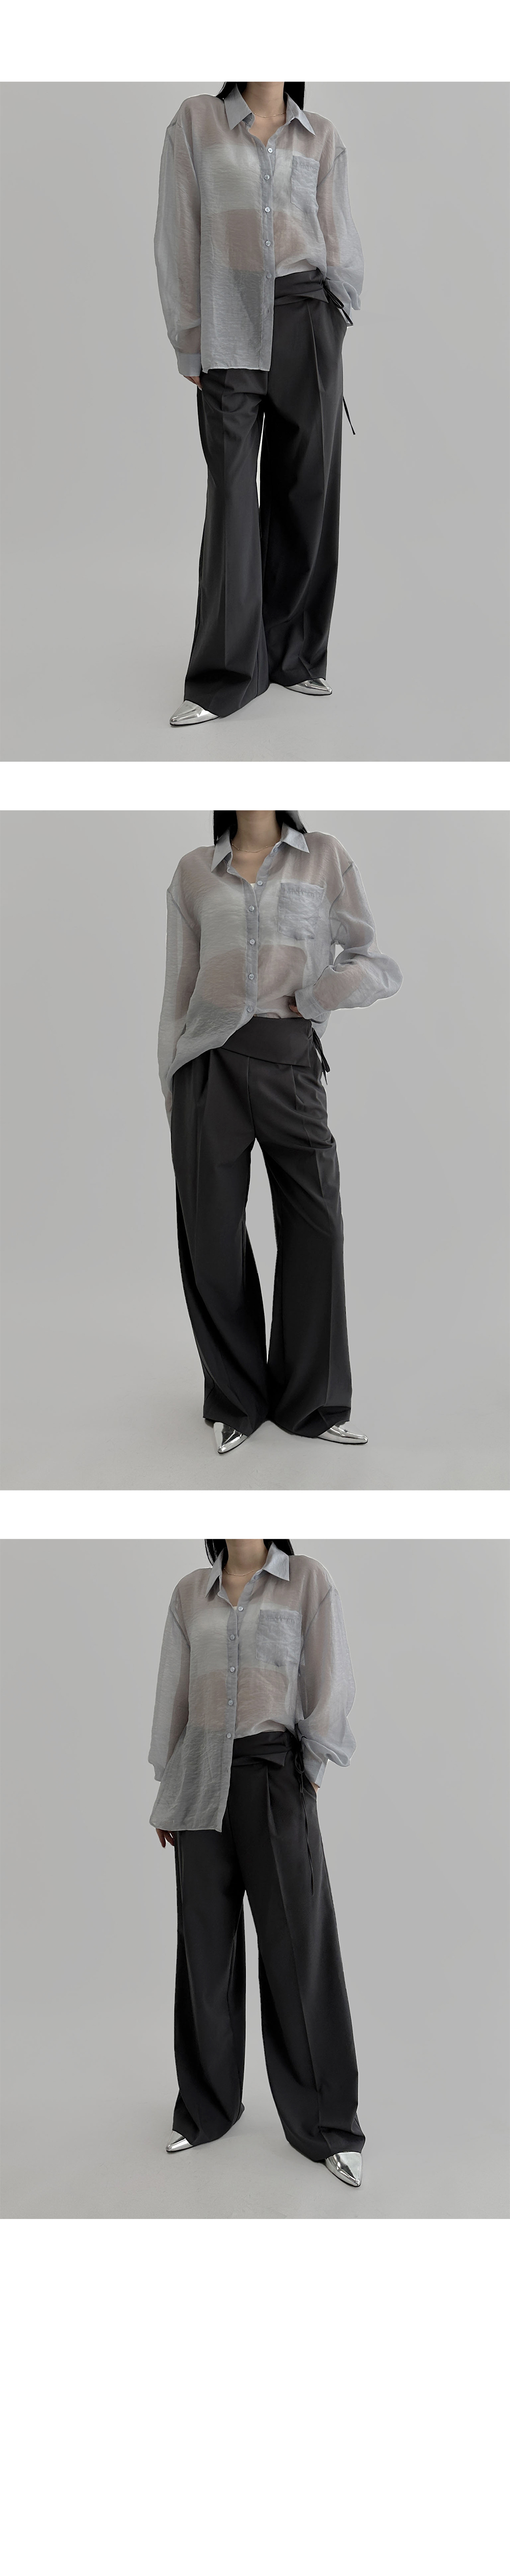 suspenders skirt/pants charcoal color image-S3L1